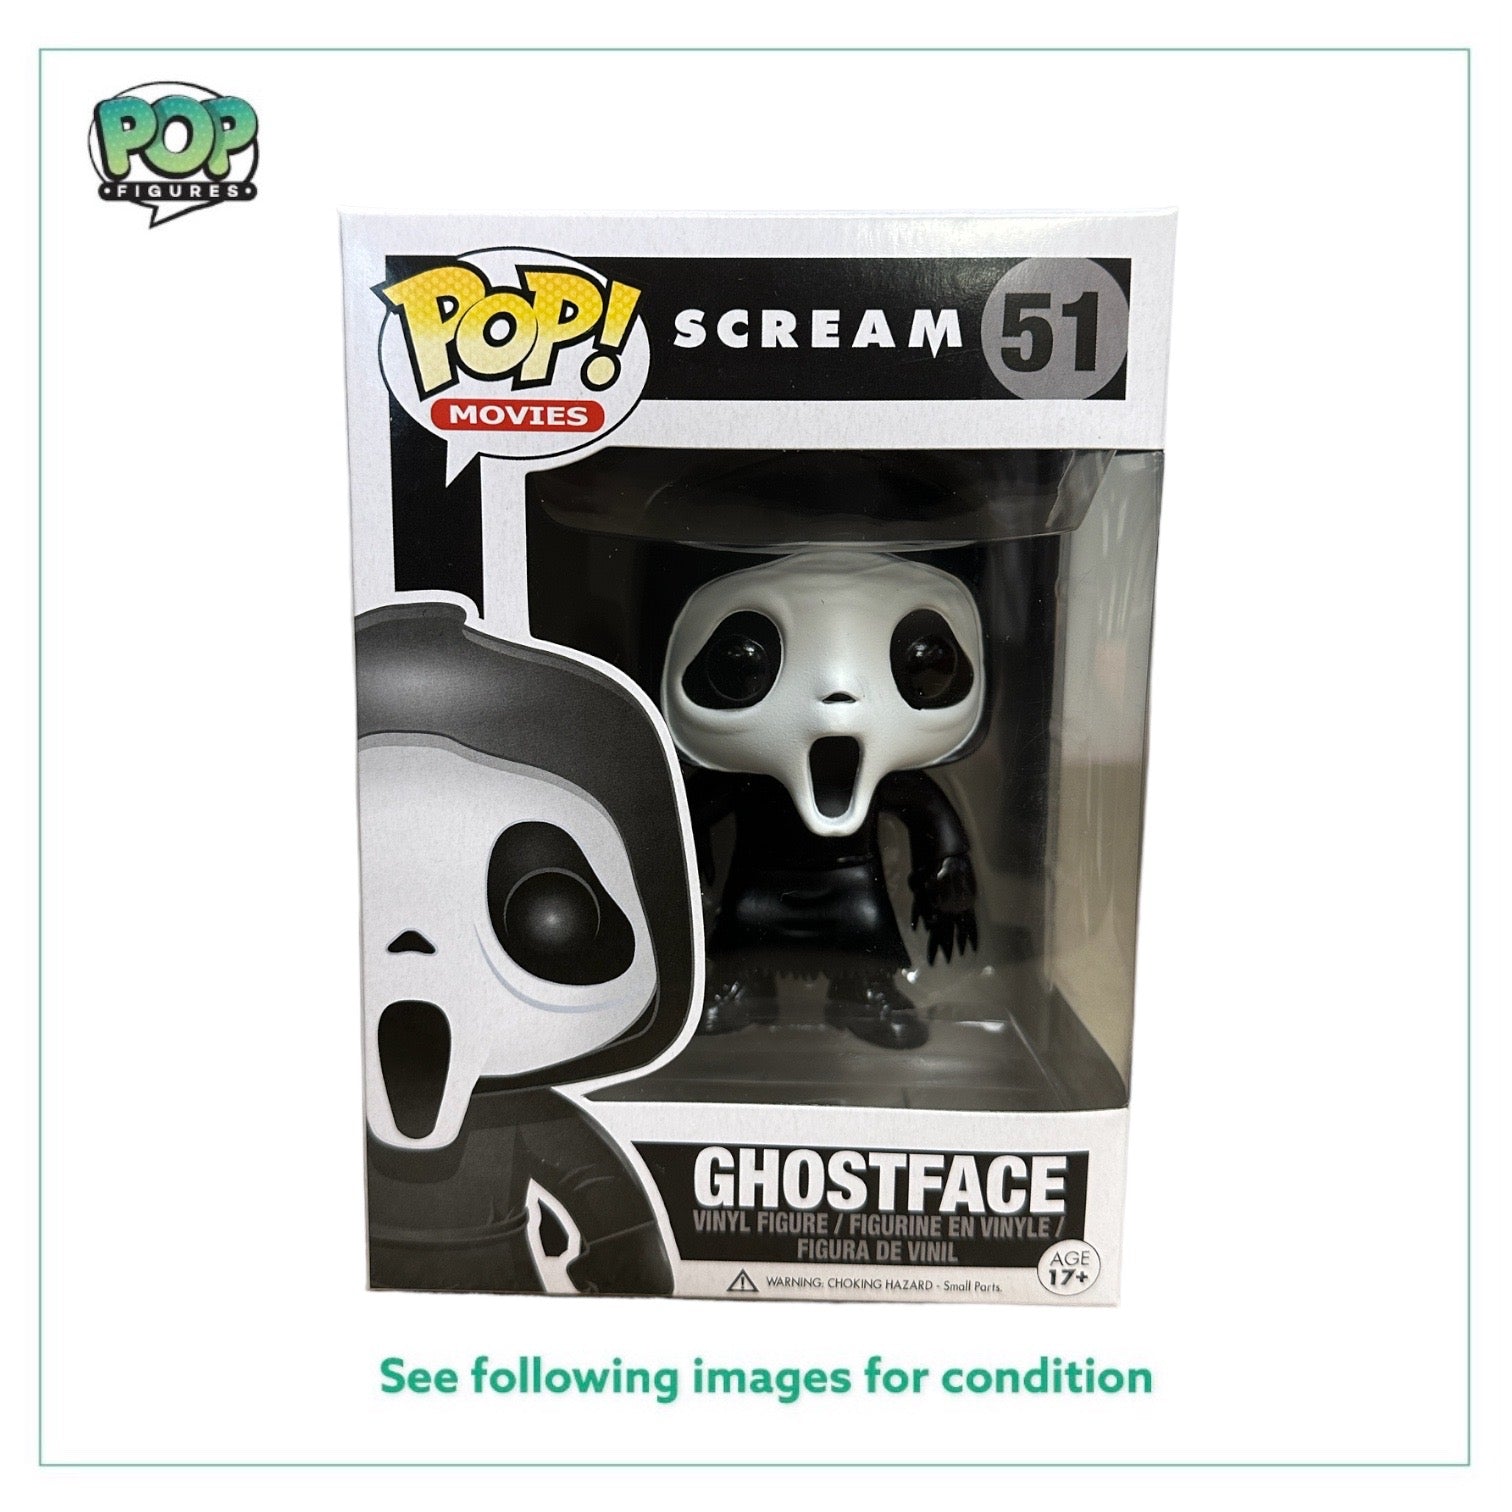 Ghostface #51 Funko Pop! - Scream - 2014 Pop! - Condition 8.75/10